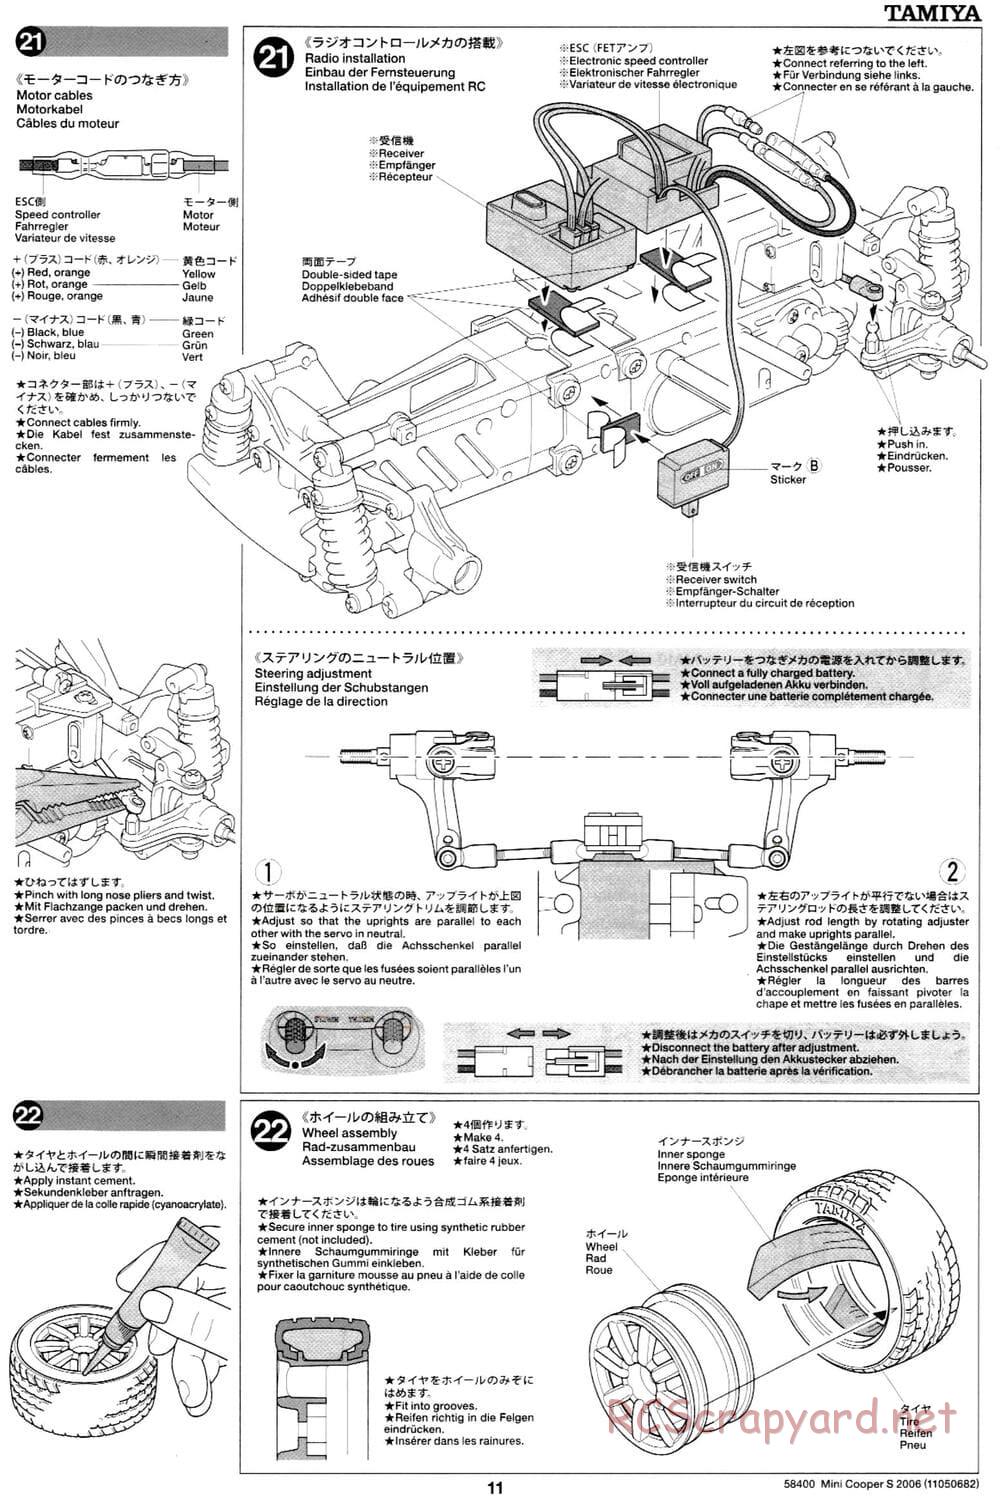 Tamiya - Mini Cooper S 2006 - M03L Chassis - Manual - Page 11